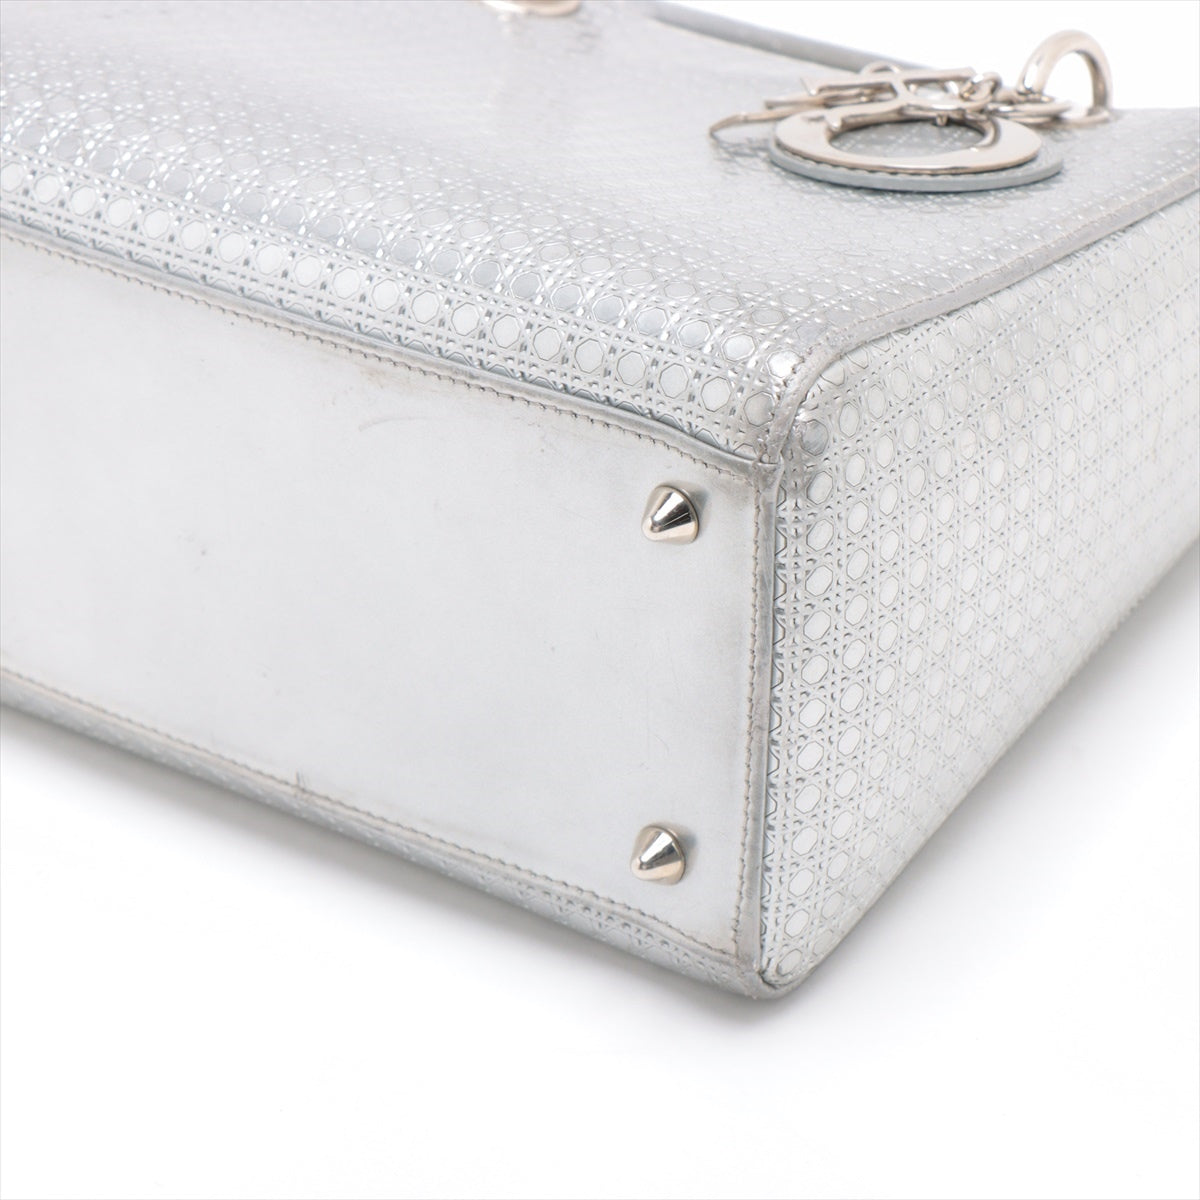 Christian Dior Lady Dior Patent leather 2way handbag Silver